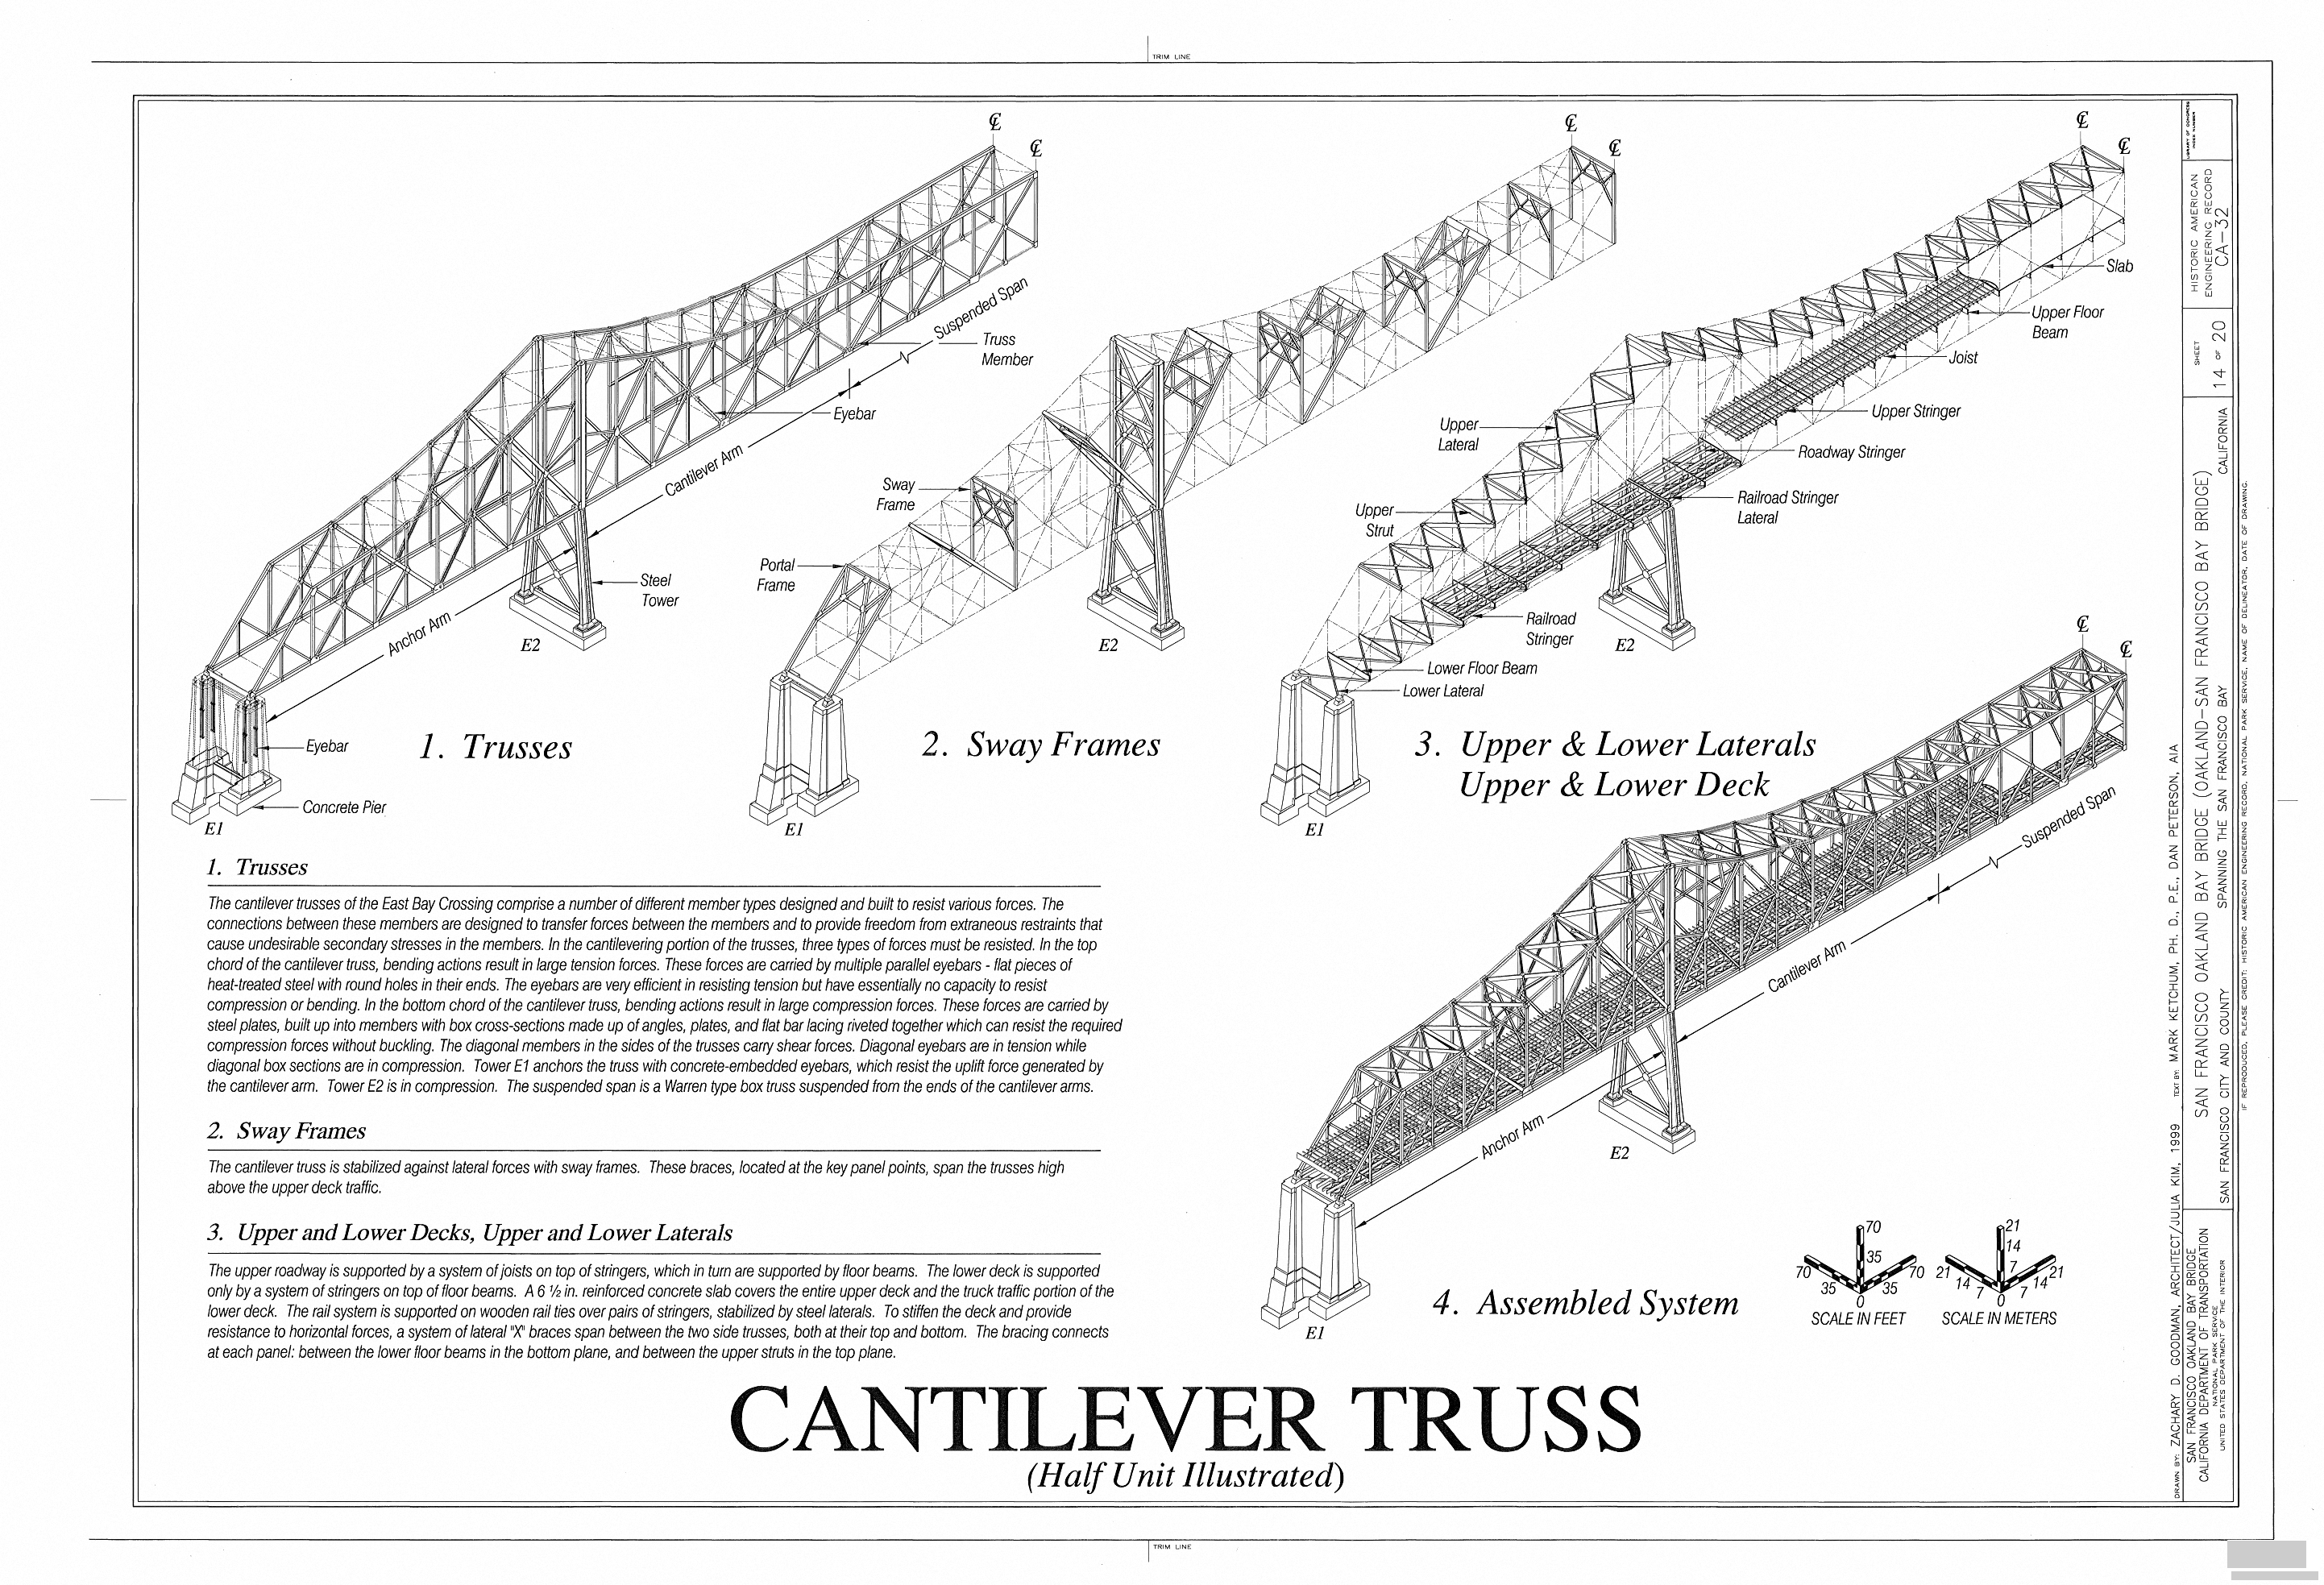 Cantilever_Truss_(Half_Unit_Illustrated)_-_San_Francisco_Oakland_Bay_Bridge,_Spa.png